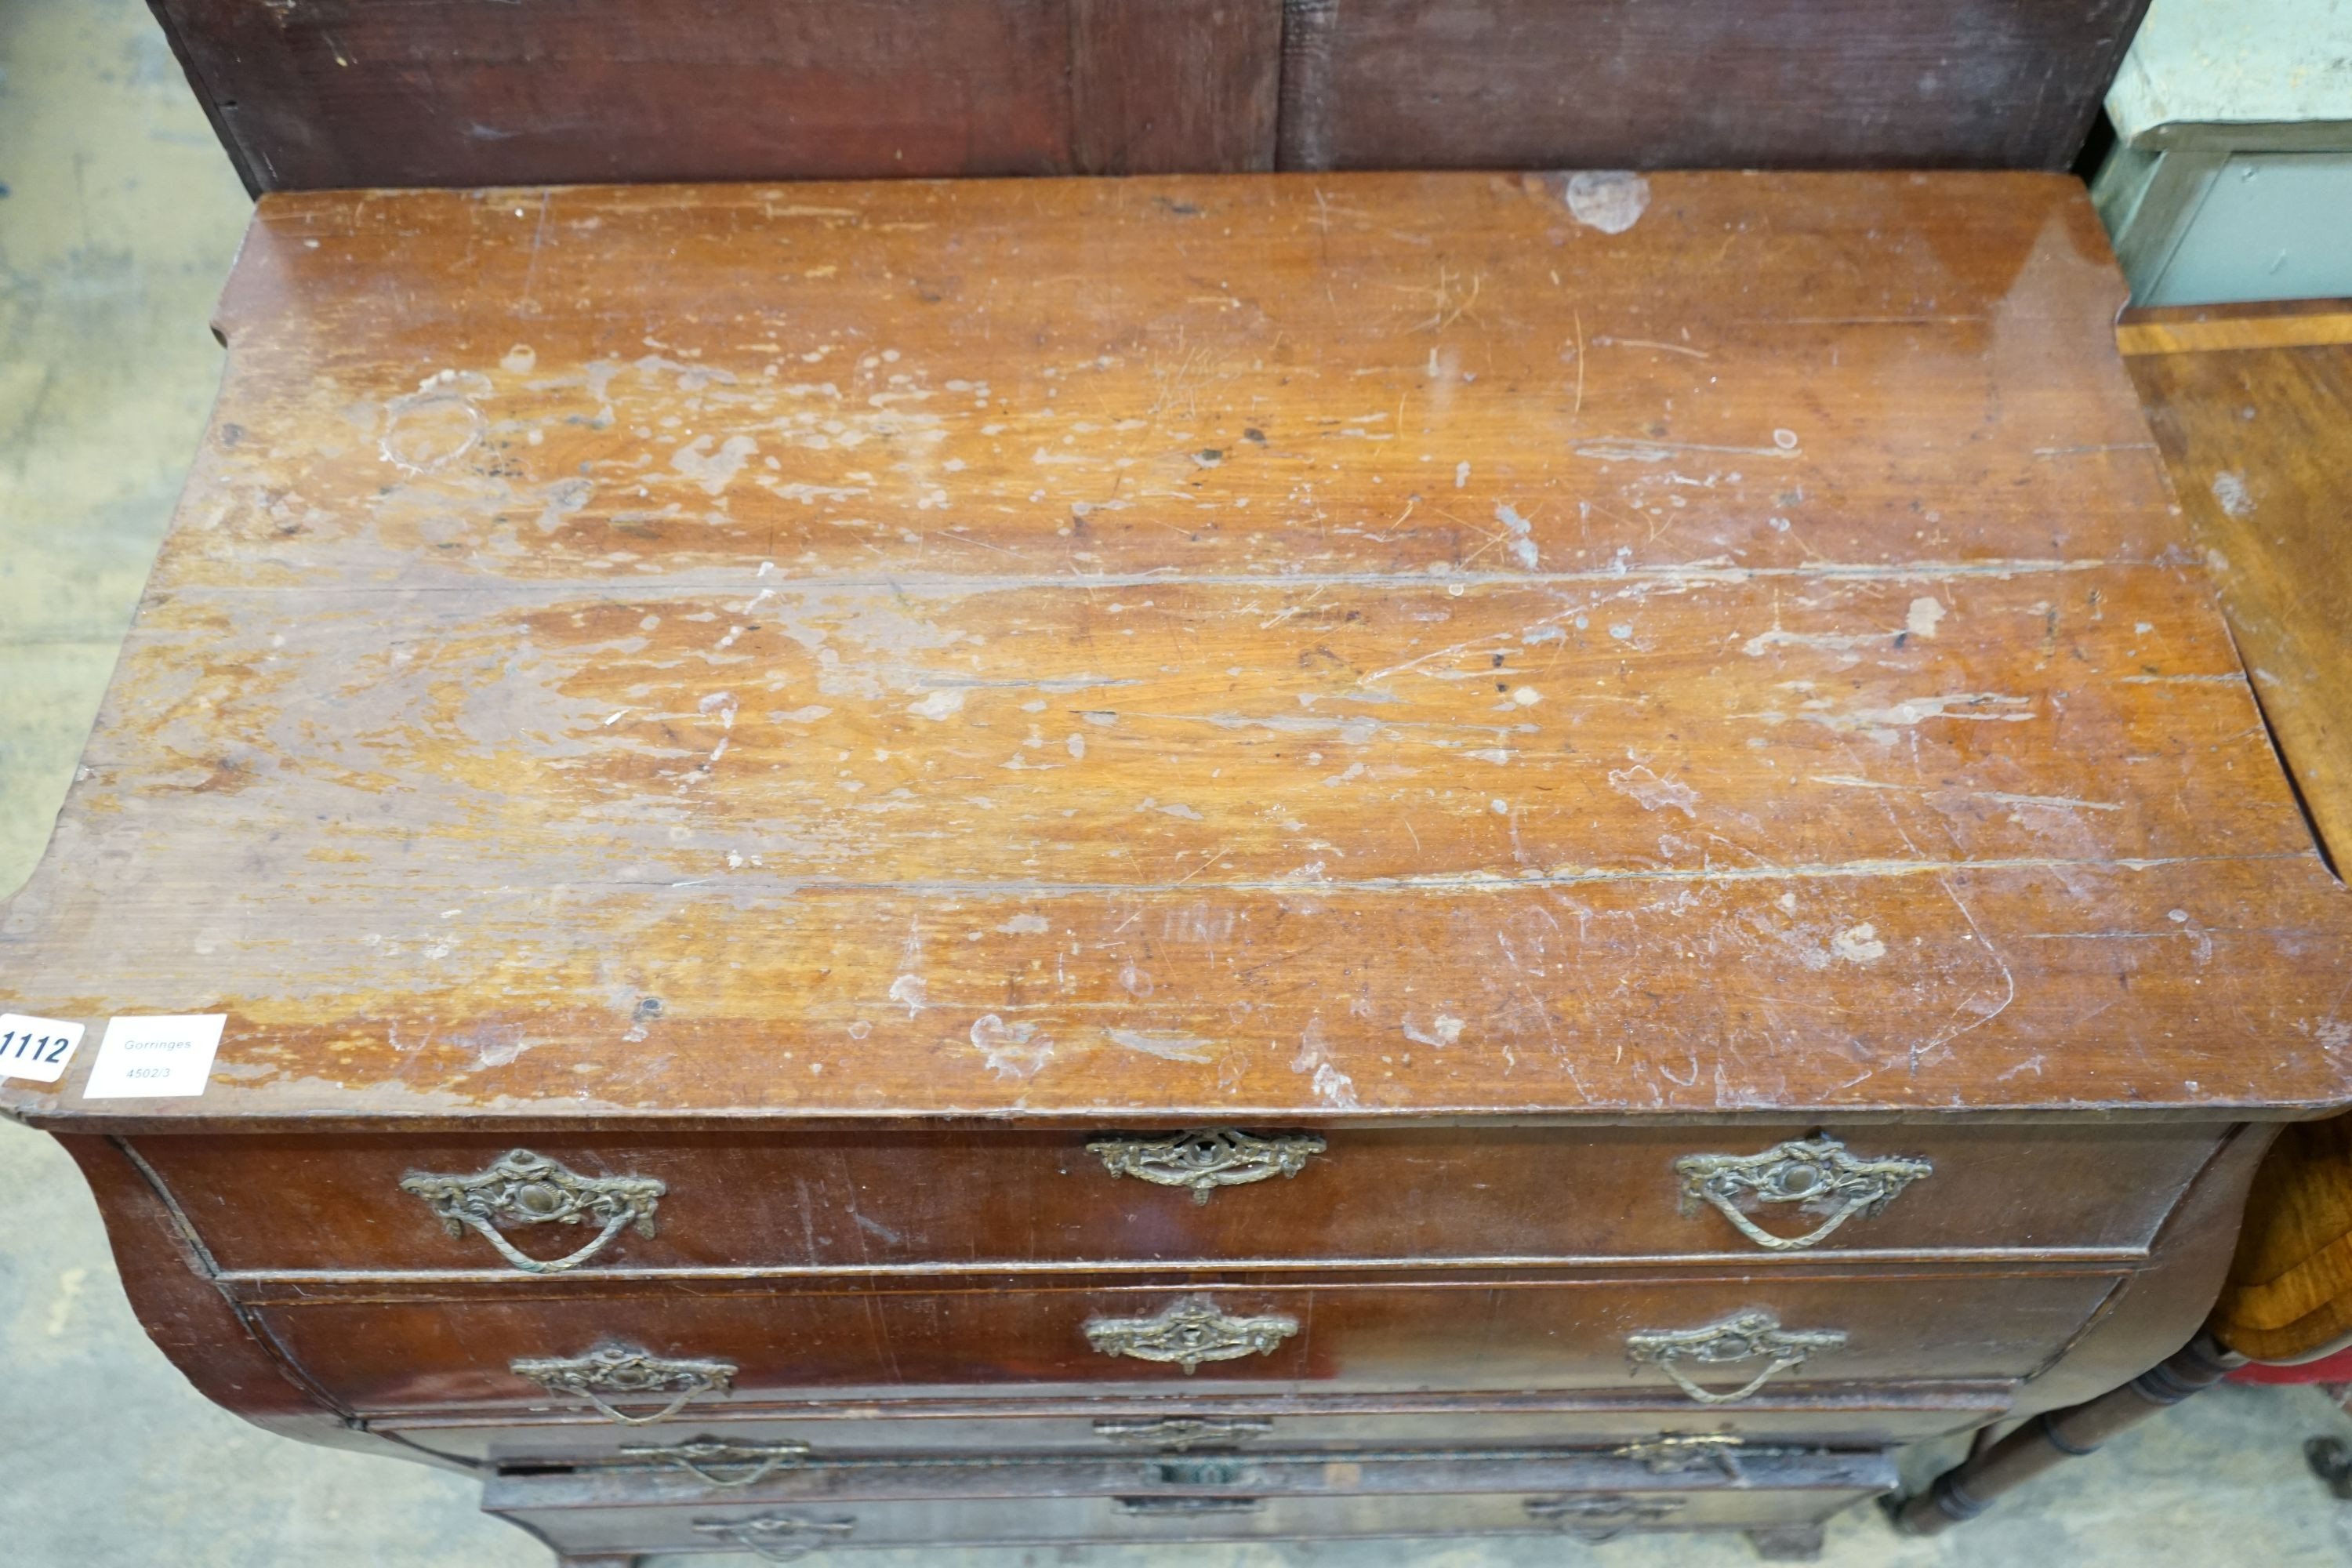 A Dutch mahogany four drawer bombe chest, width 89cm, depth 49cm, height 81cm